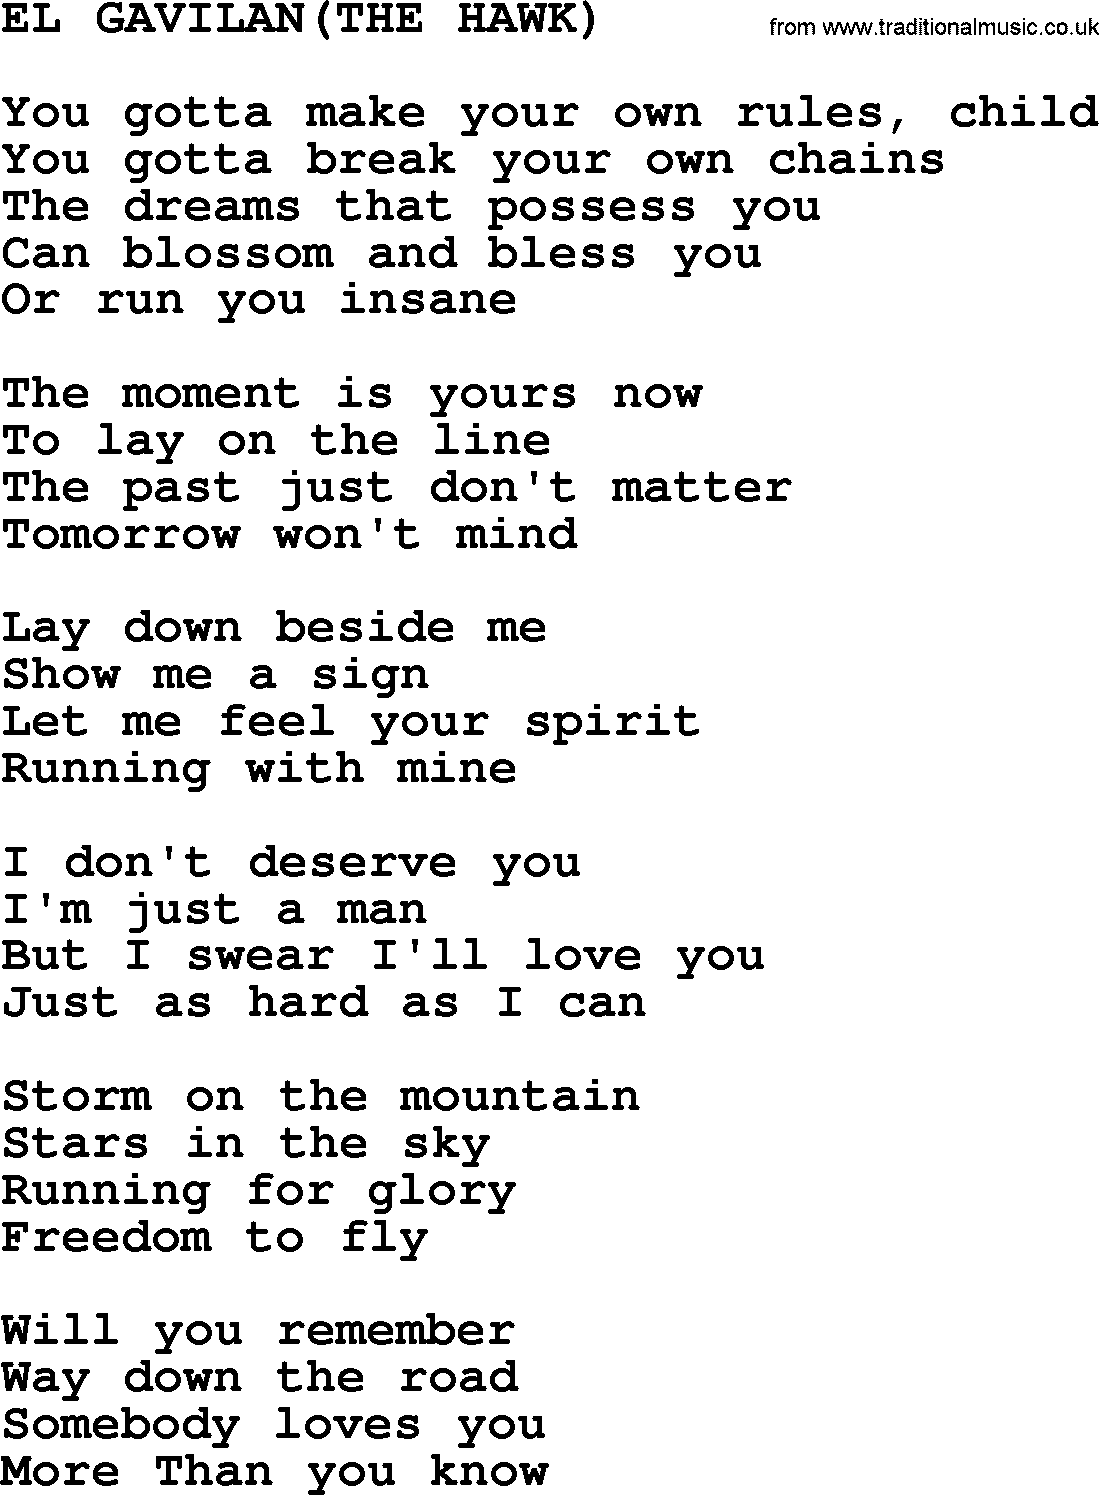 Kris Kristofferson song: El Gavilan(the Hawk) lyrics